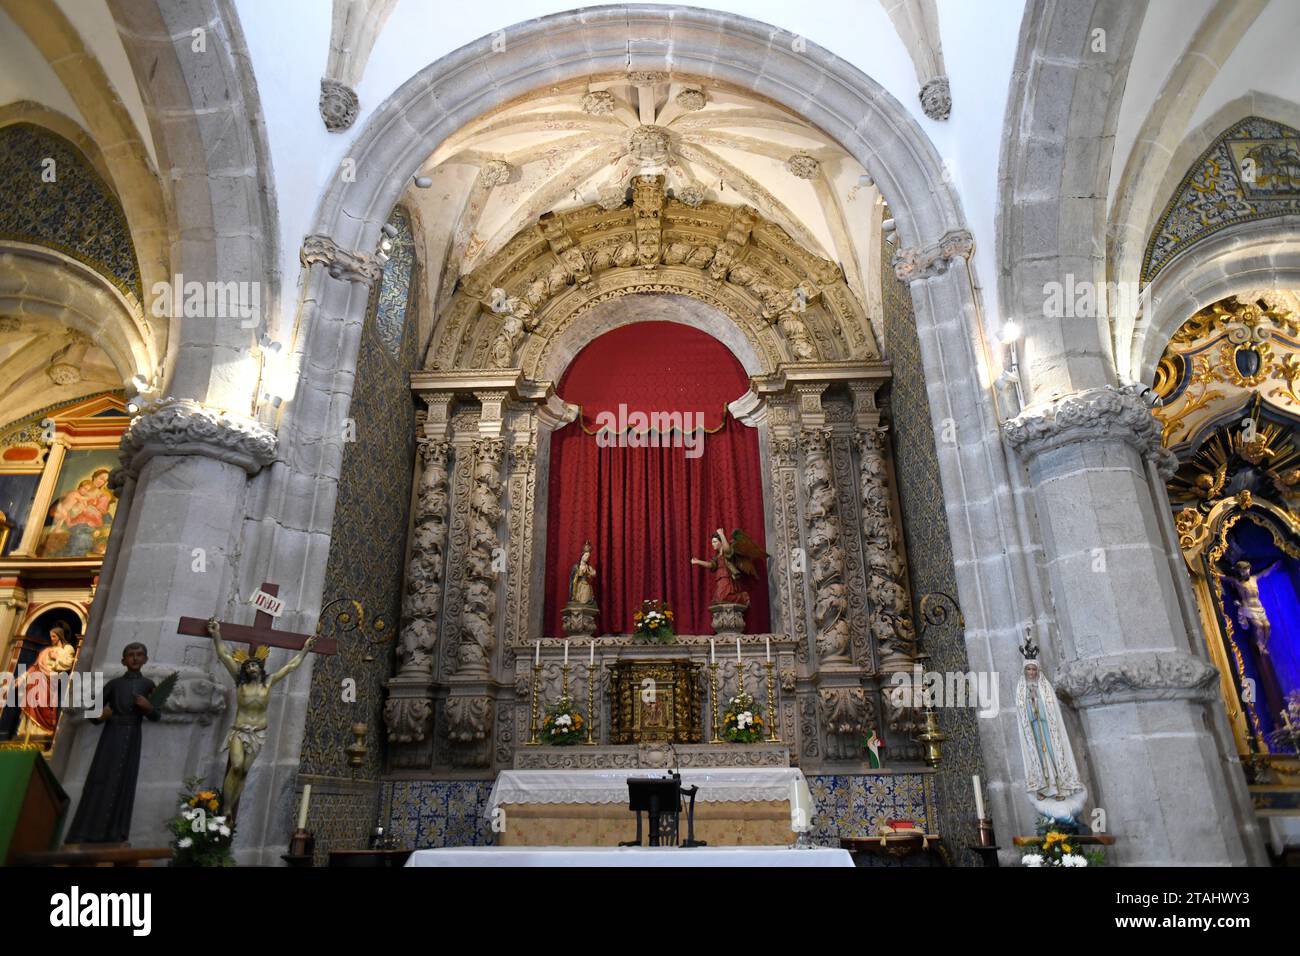 Viana do Alentejo, Igreja de Nossa Senhora da Anunciaçao (estilo manuelino) dentro del castillo. Évora, Alentejo, Portugal. Foto de stock